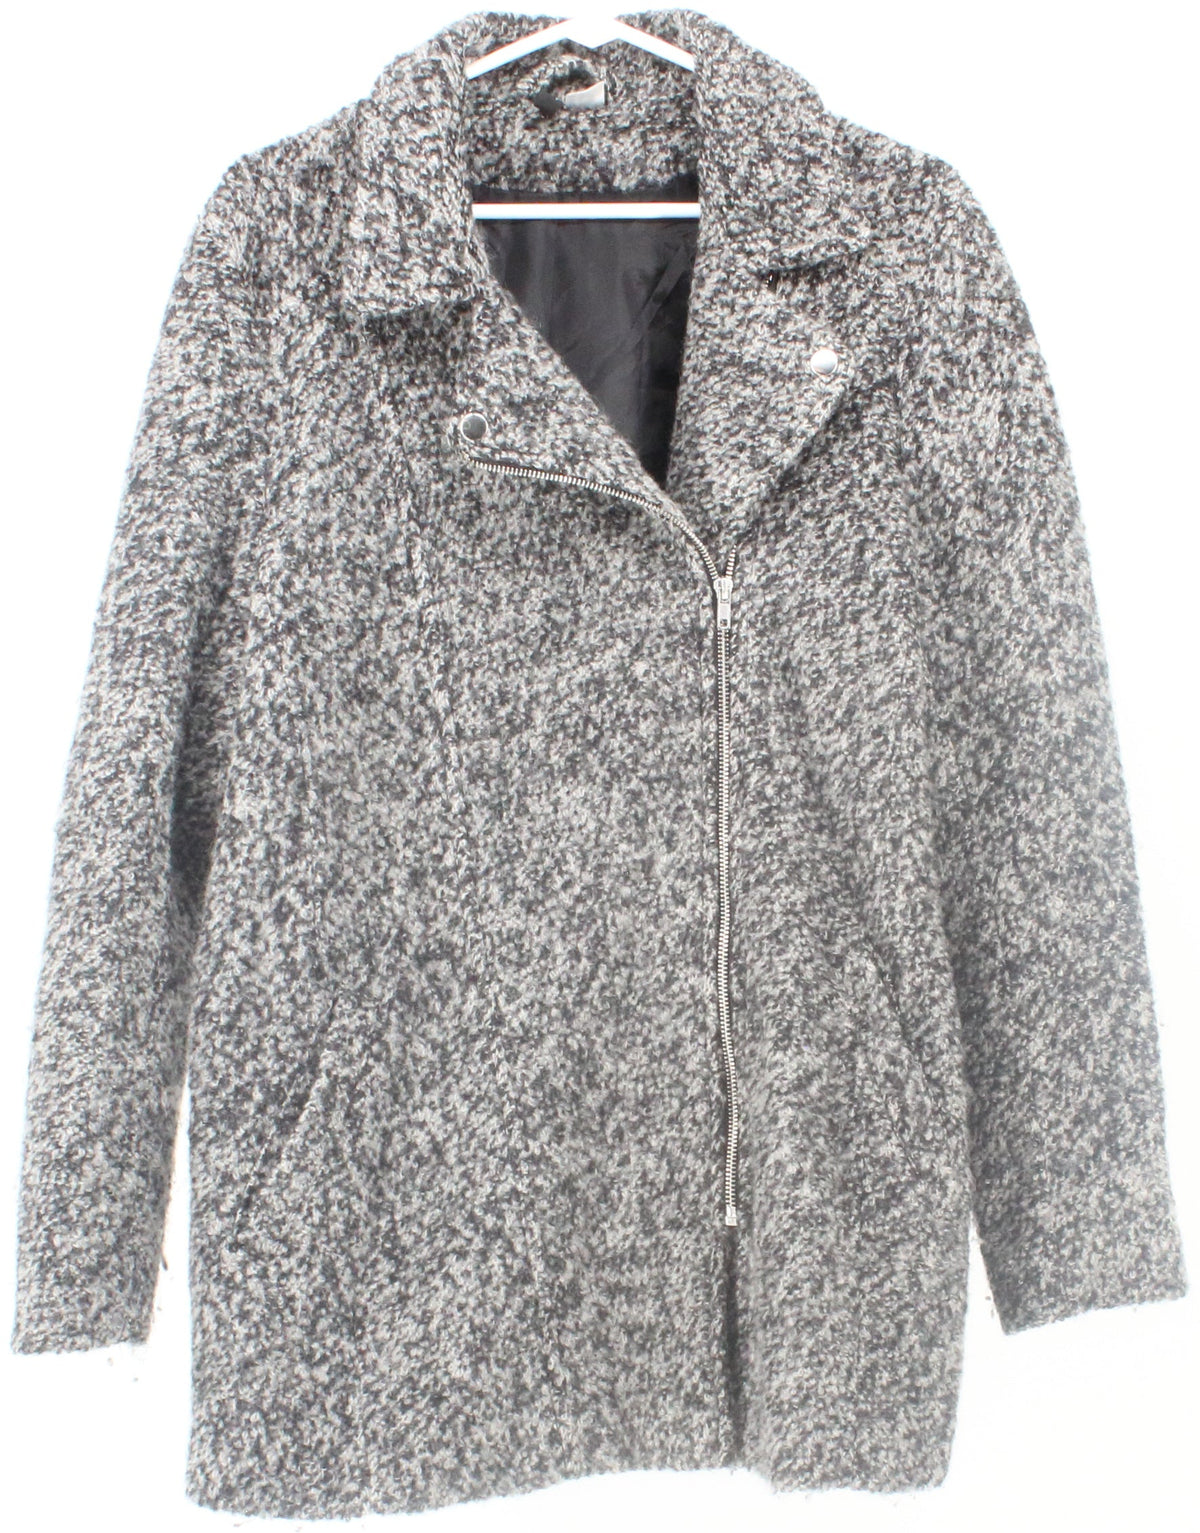 H&M Black and Grey Plaid Zipped Women's Coat